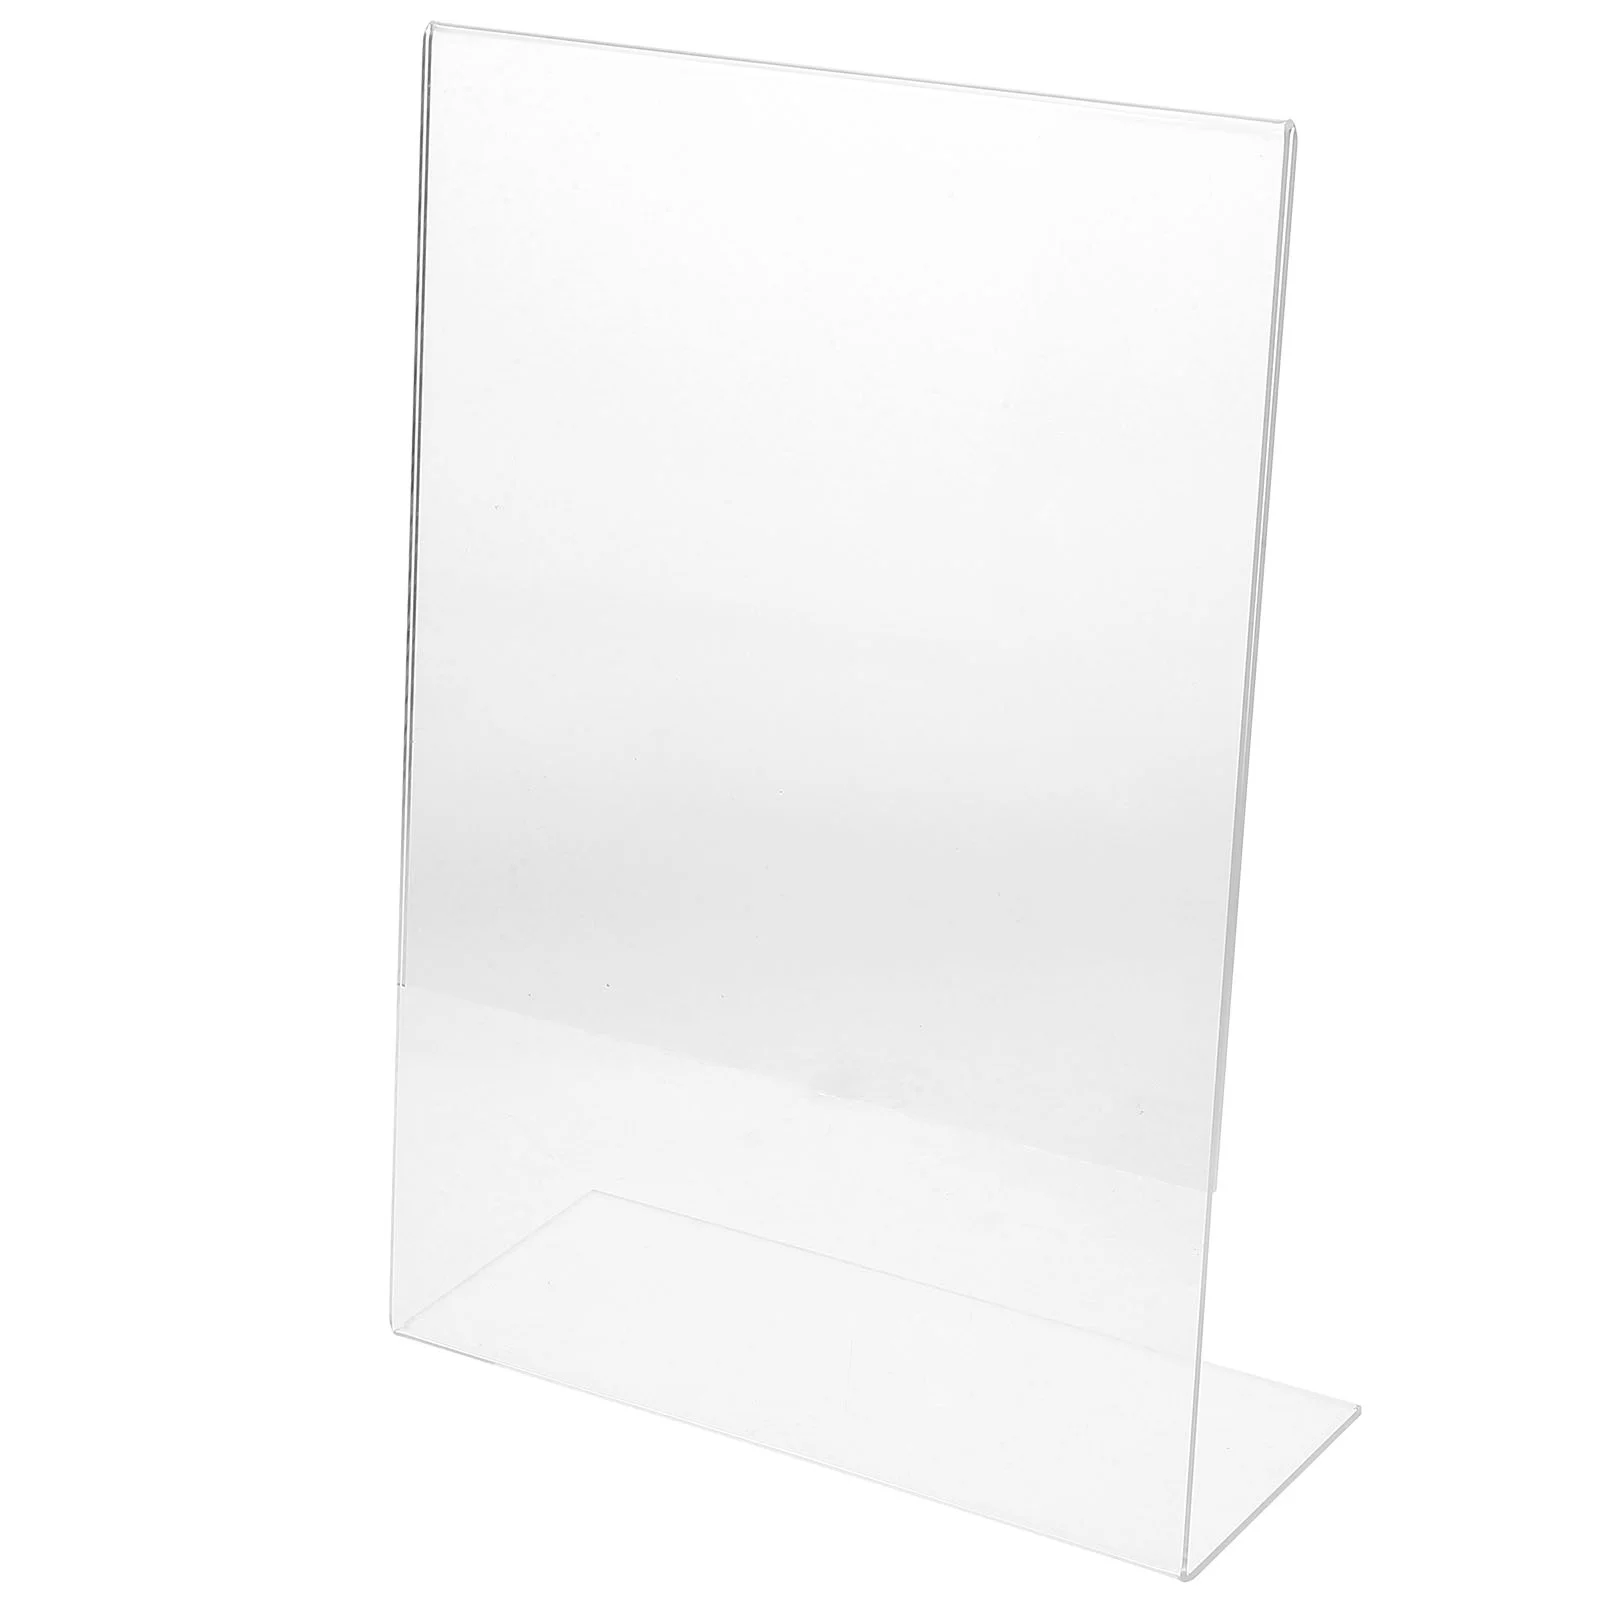 

Tabletop Slant Board Clear Design Slant Board Painting Board Support Rack Writing Board Storage Holder